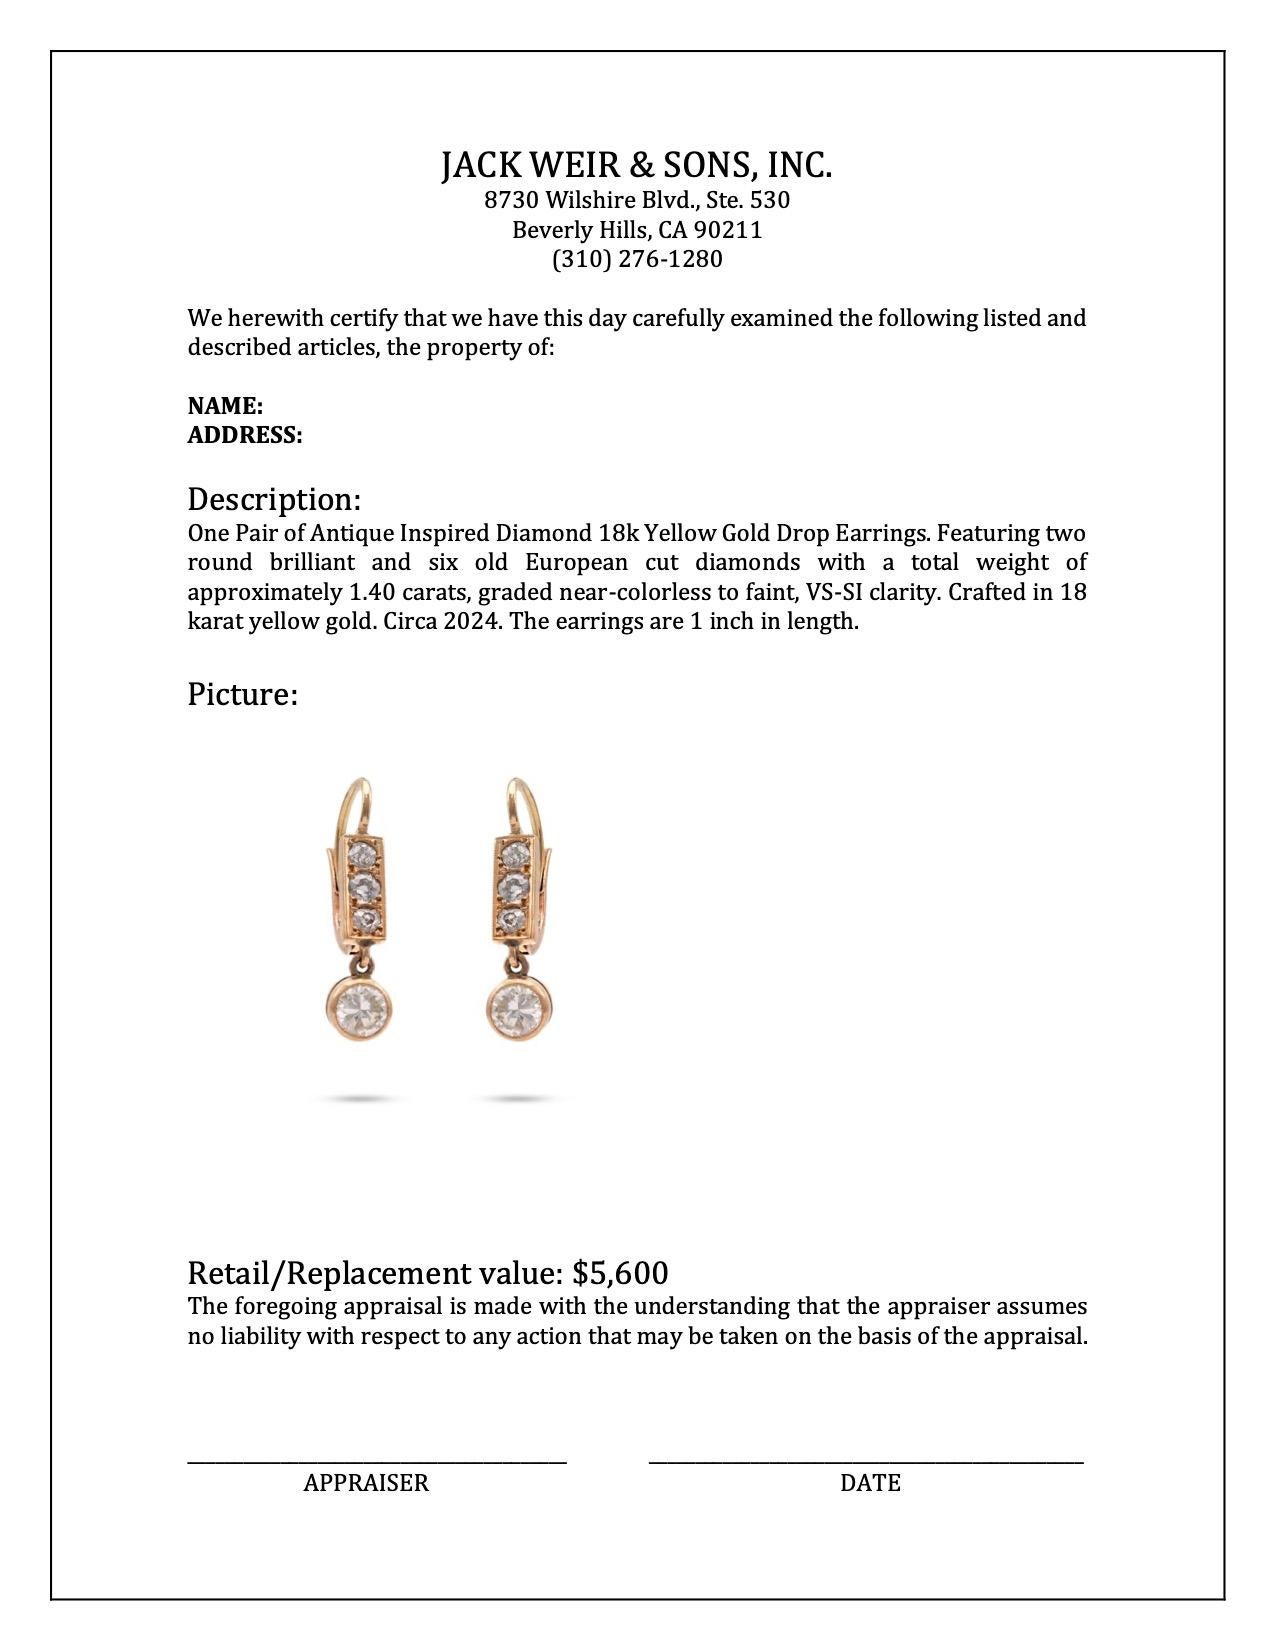 Women's or Men's Antique Inspired Diamond 18k Yellow Gold Drop Earrings For Sale